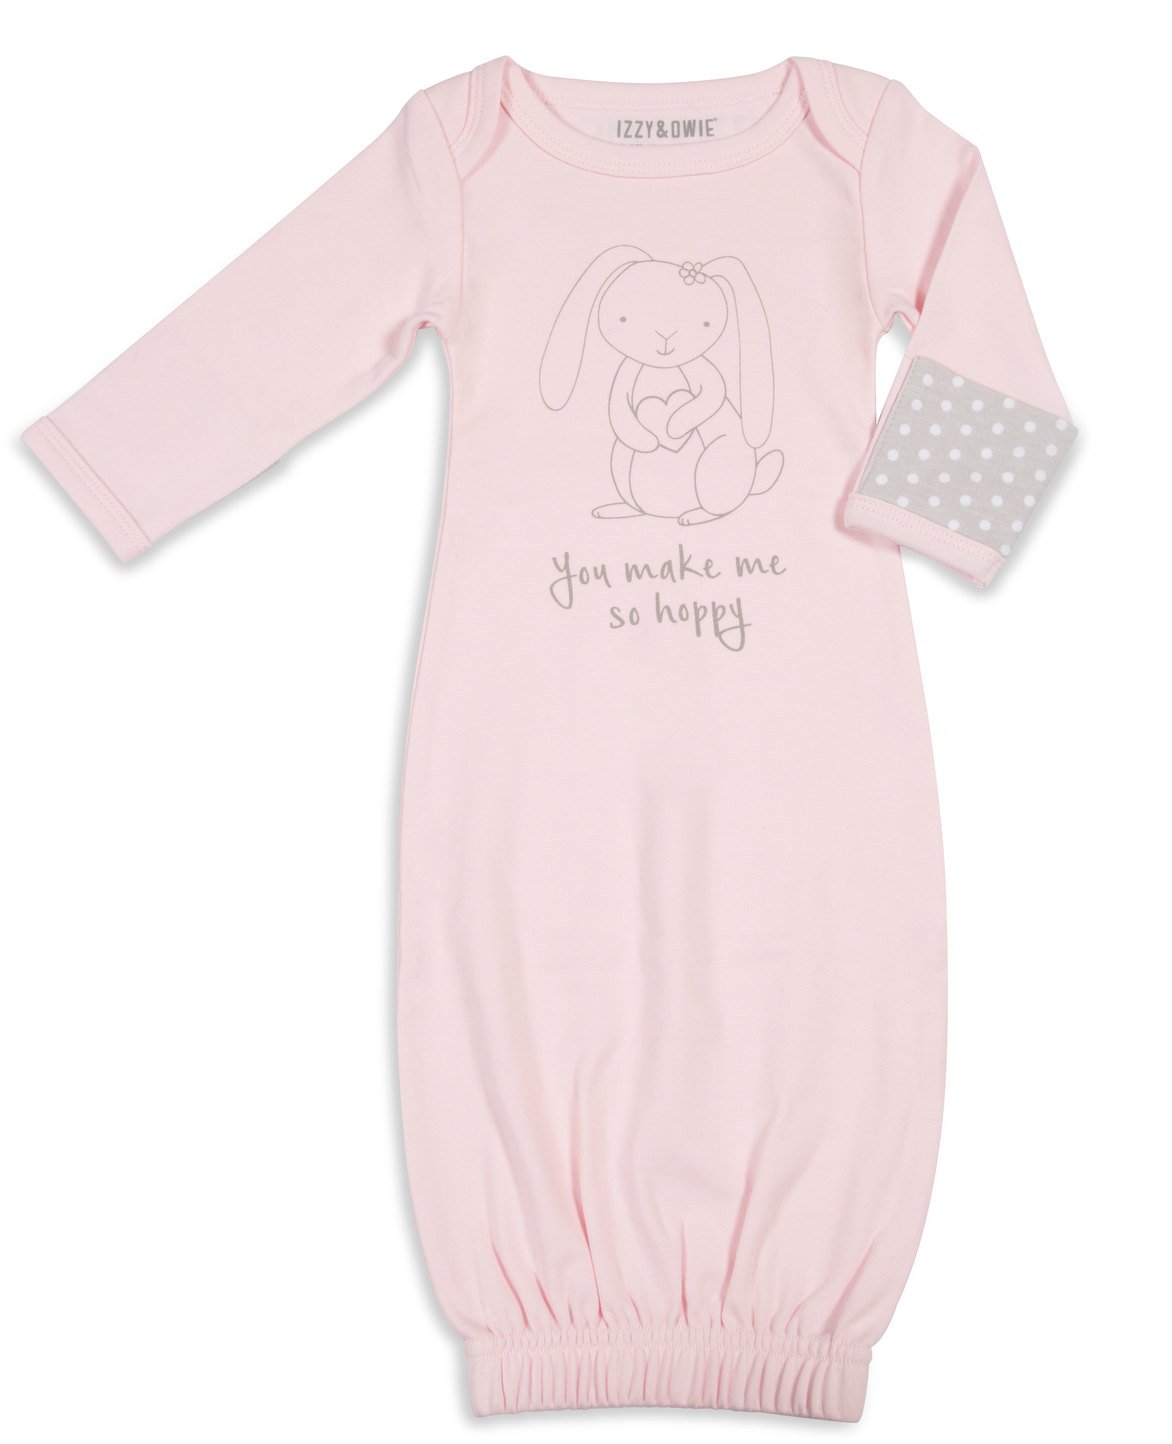 You make me so hoppy Baby Sleeping Gown w/Mitten Cuffs Baby Pajamas Izzy & Owie - GigglesGear.com